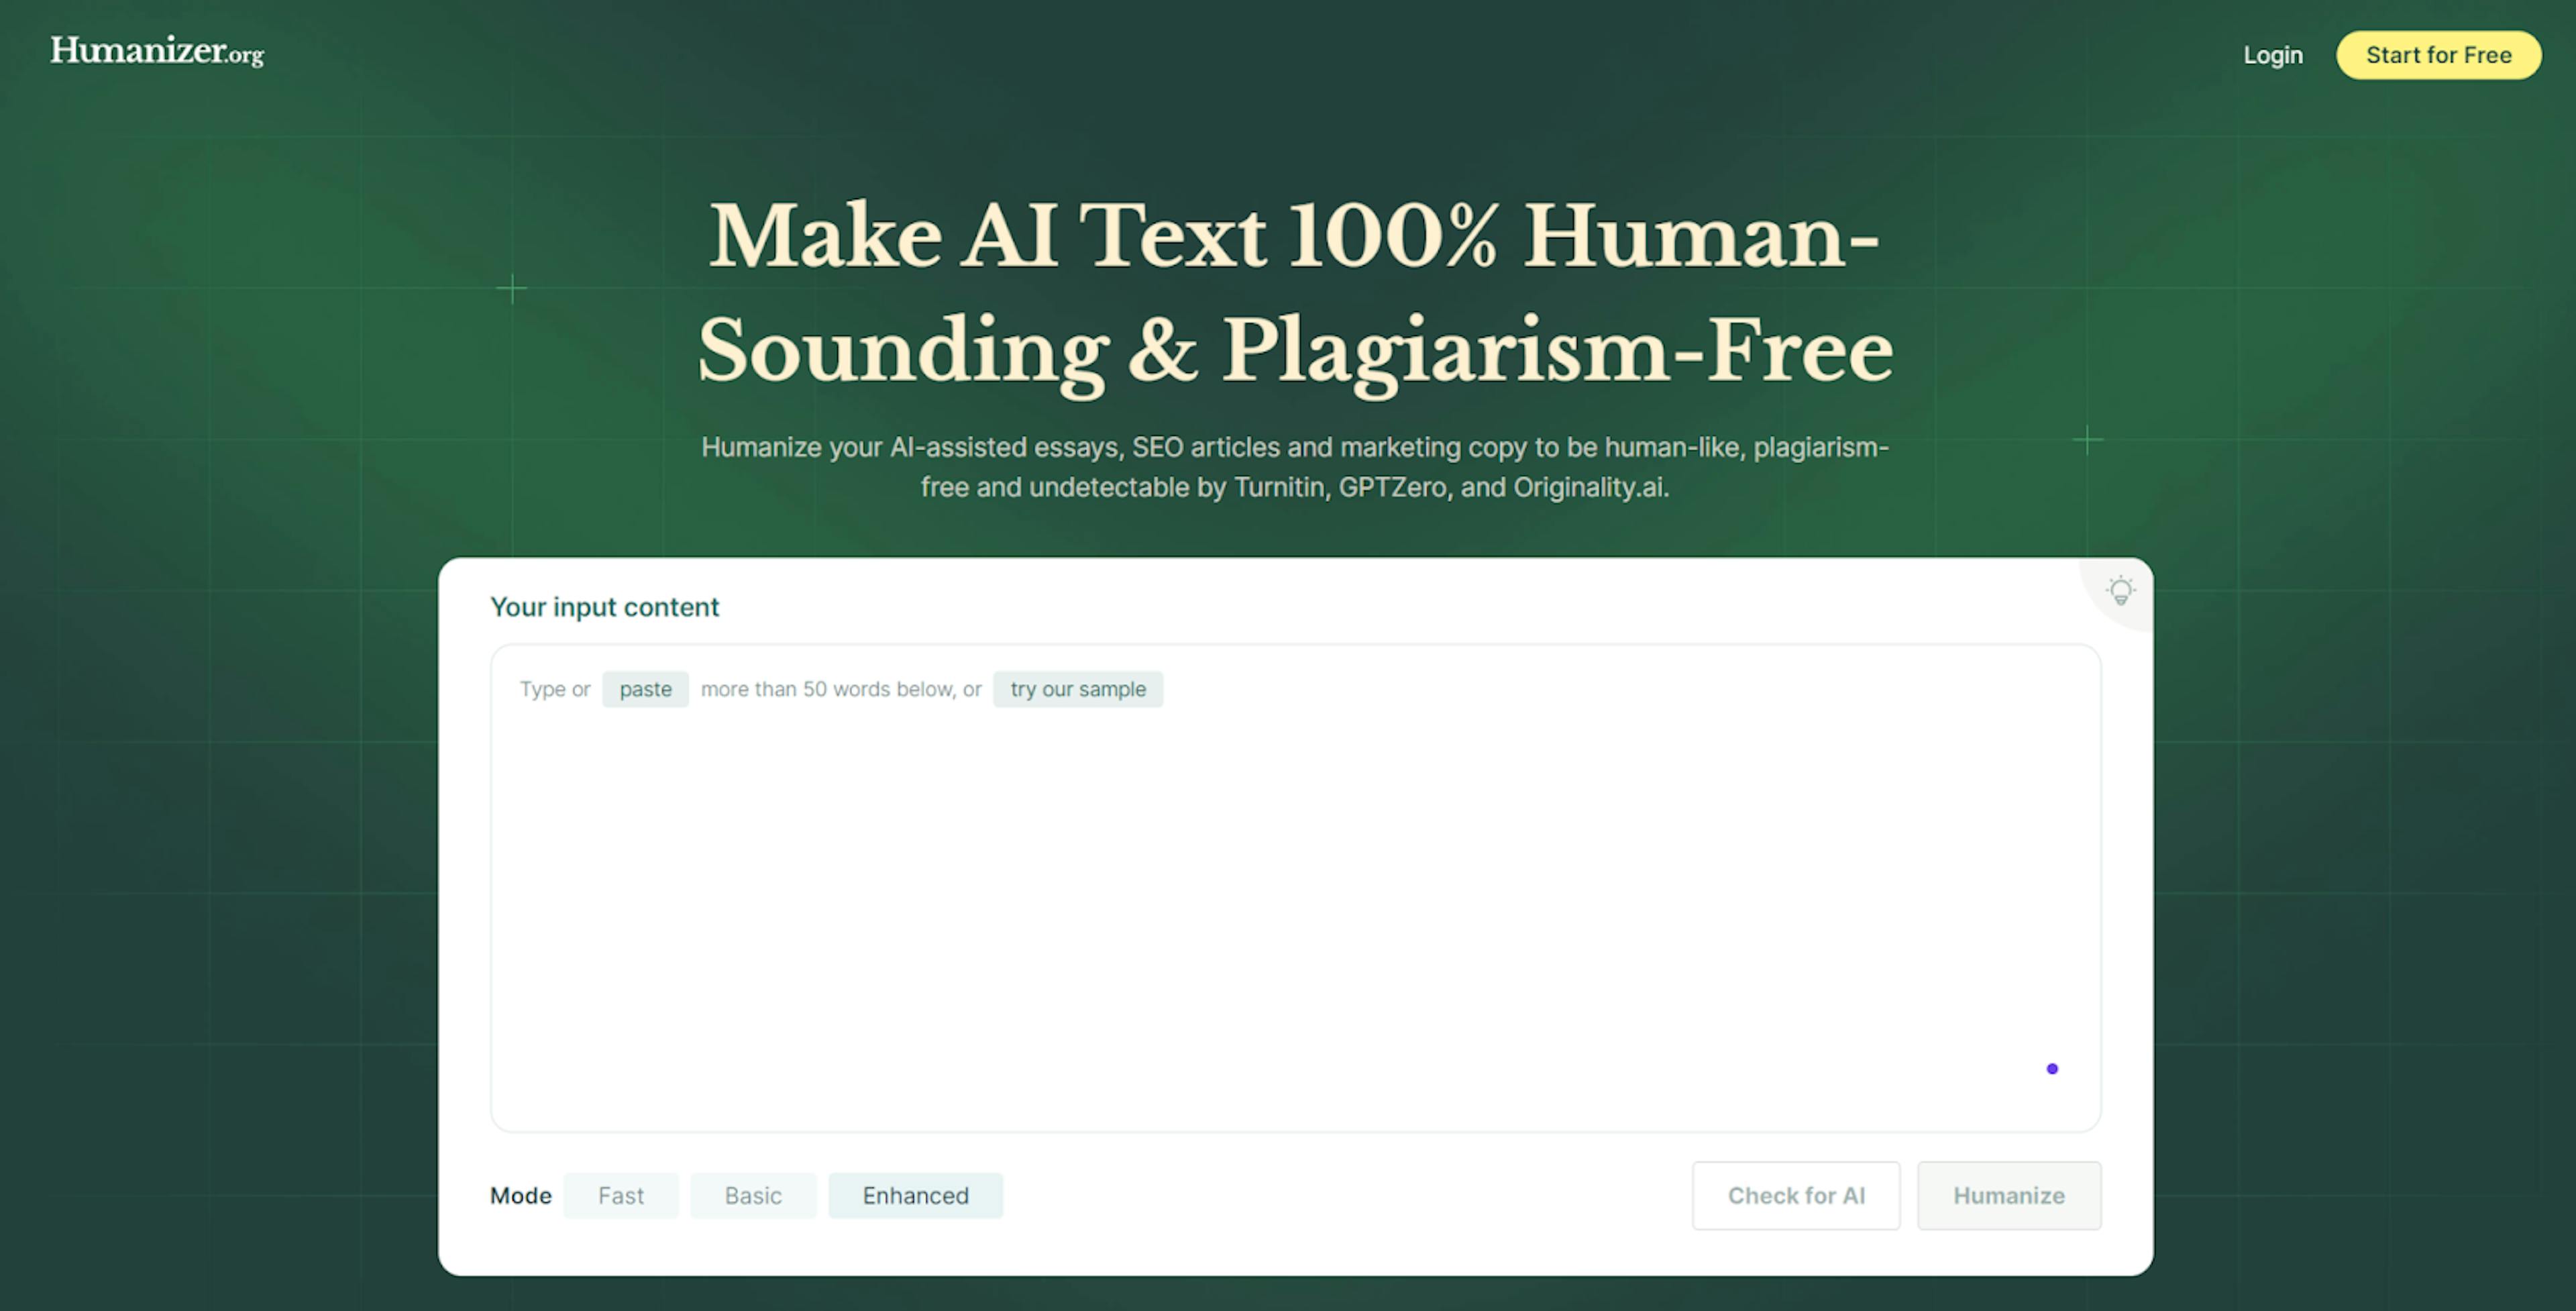 featured image - Humanizer.org レビュー: AI コンテンツを無料で検出不能にする